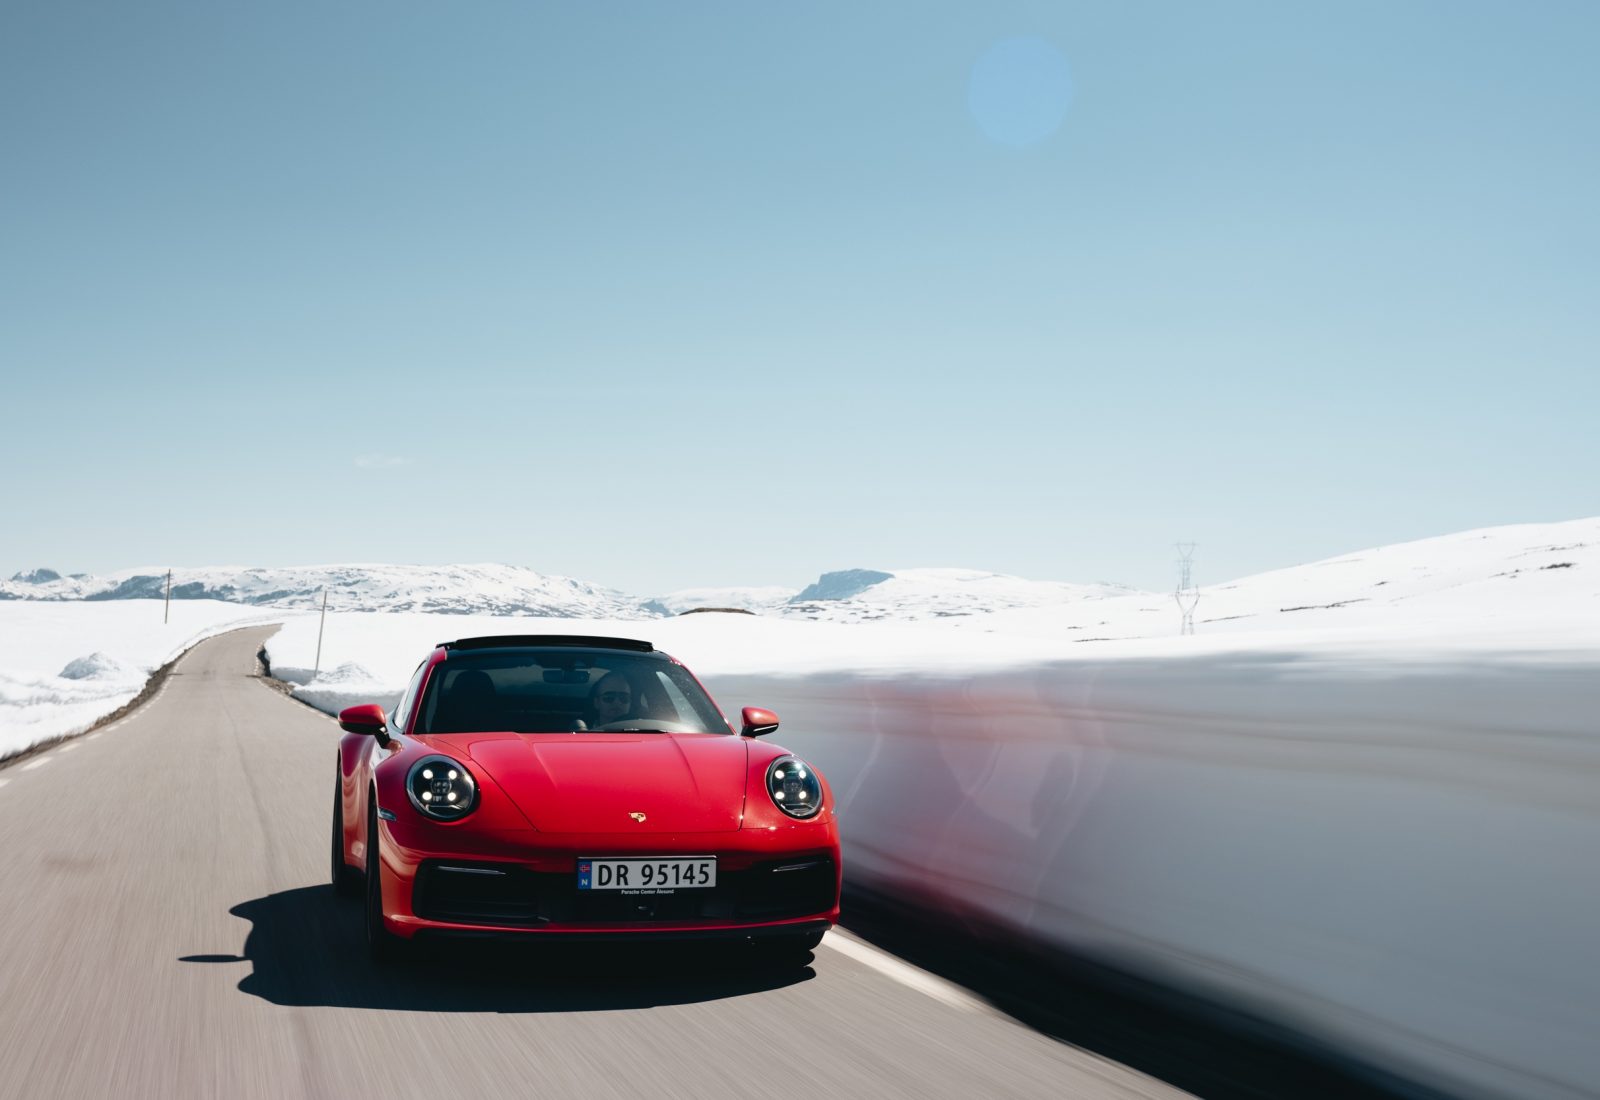 Porsche-utleie i majestetiske omgivelser 